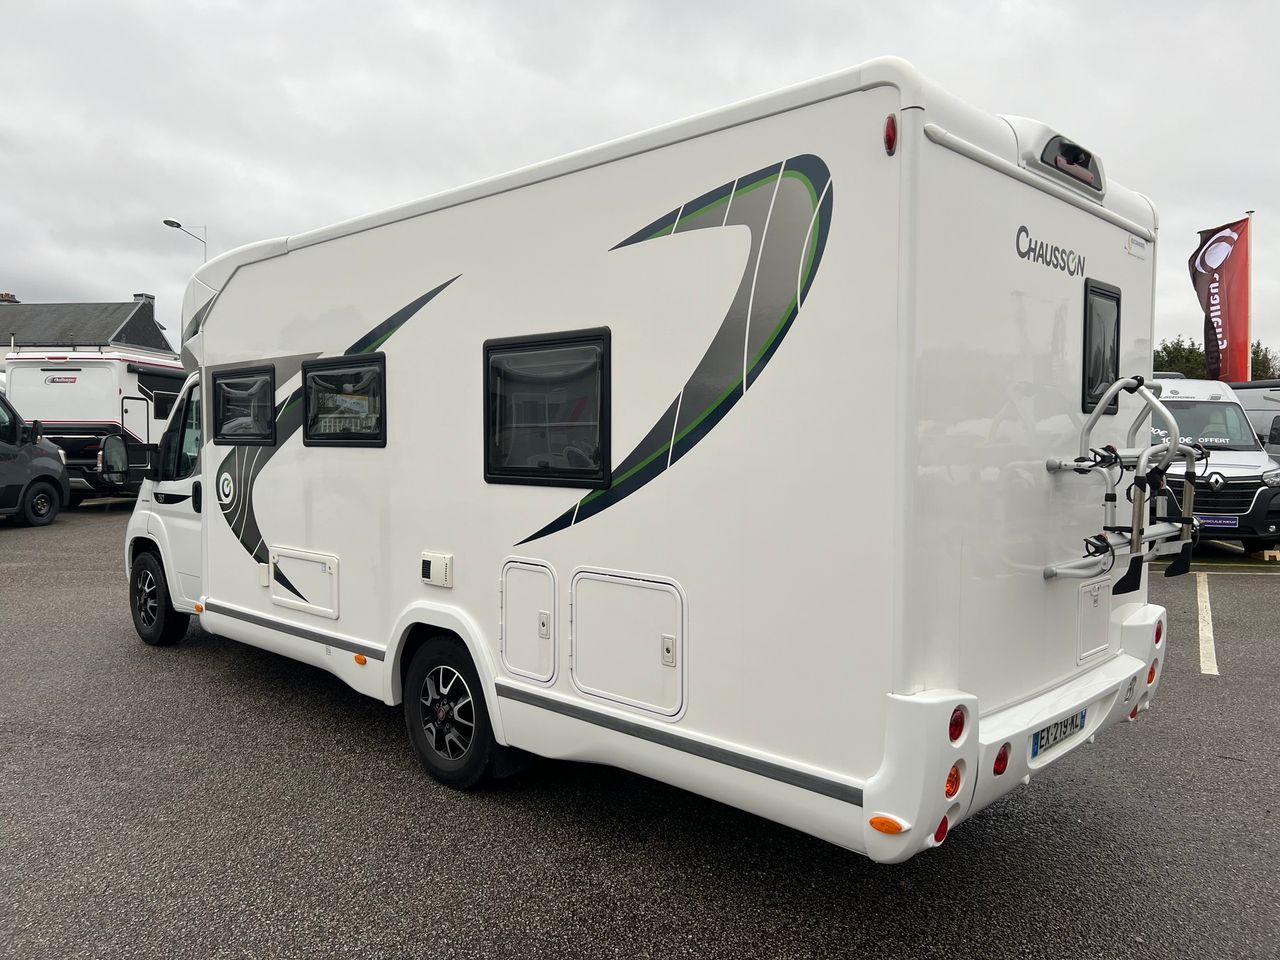 Camping-car - Chausson - chausson titanium 757 LJ - 2018